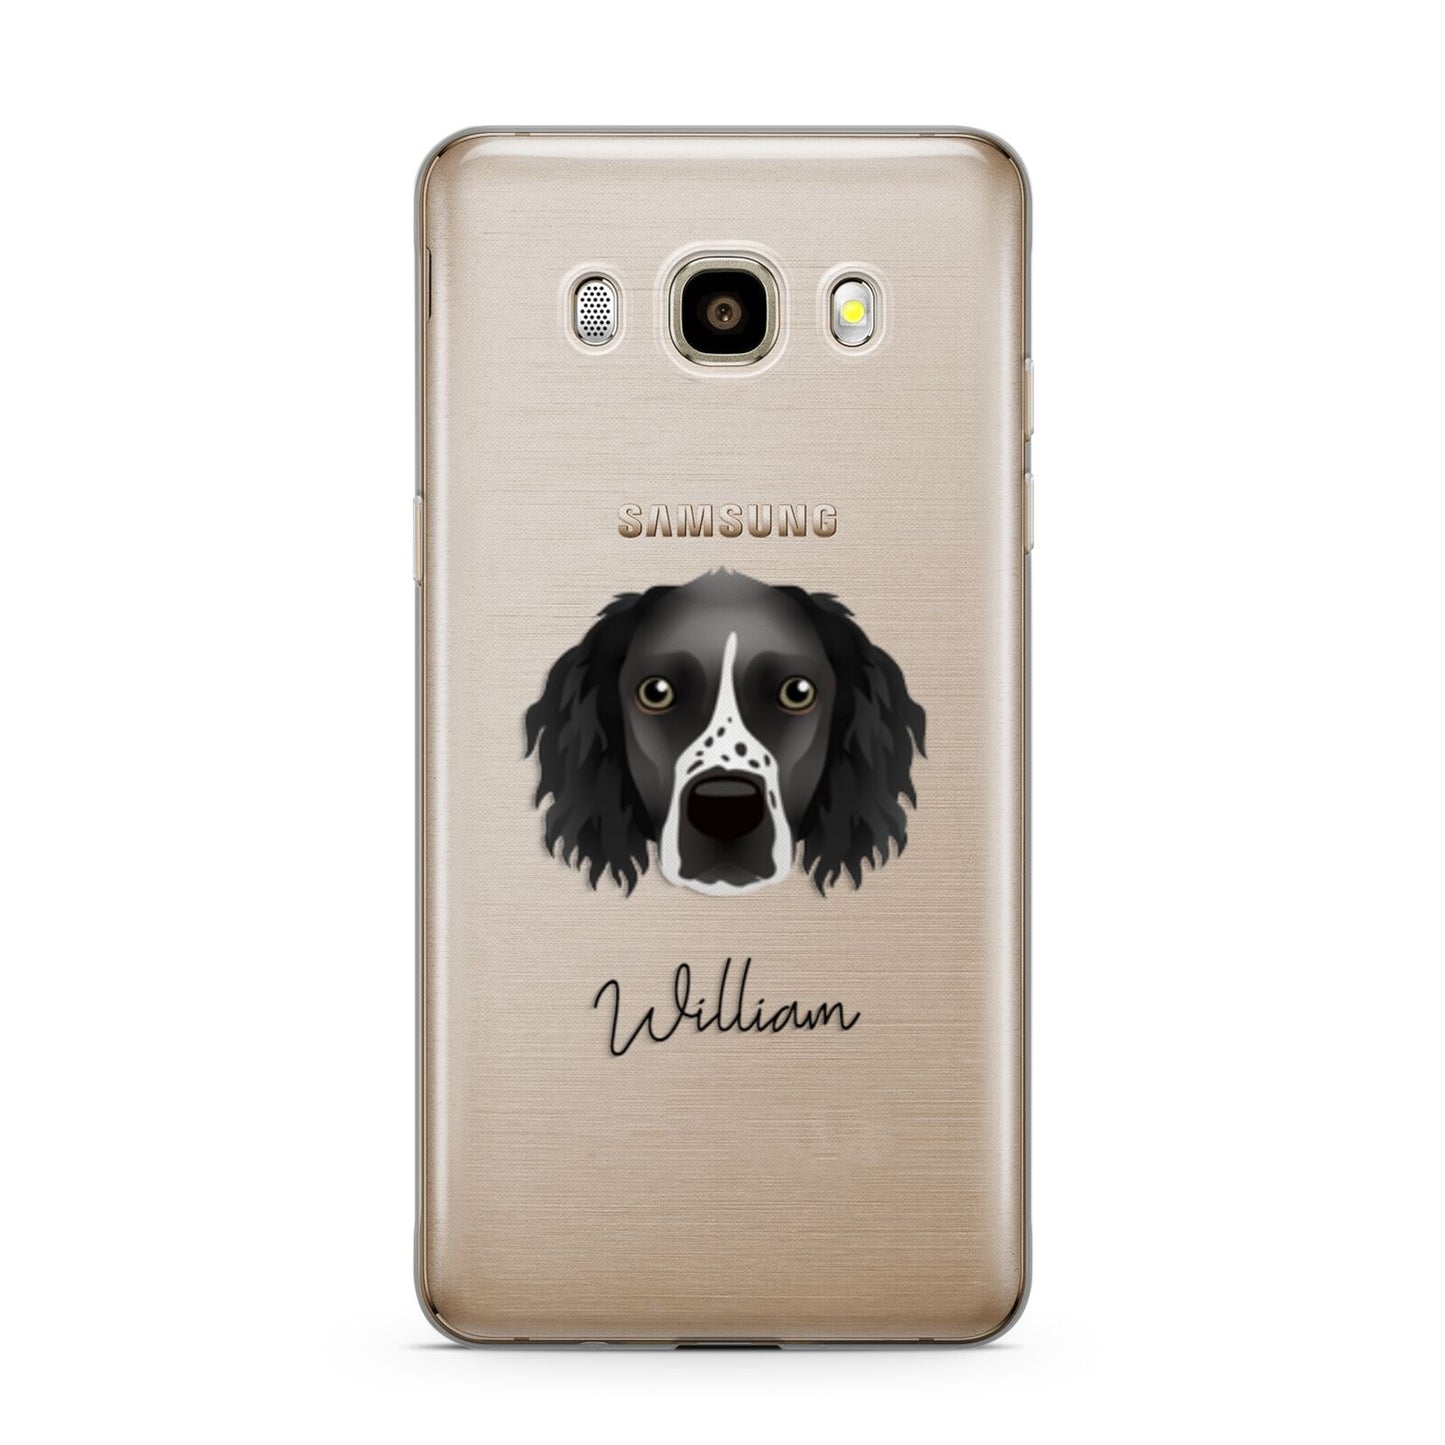 Sprocker Personalised Samsung Galaxy J7 2016 Case on gold phone